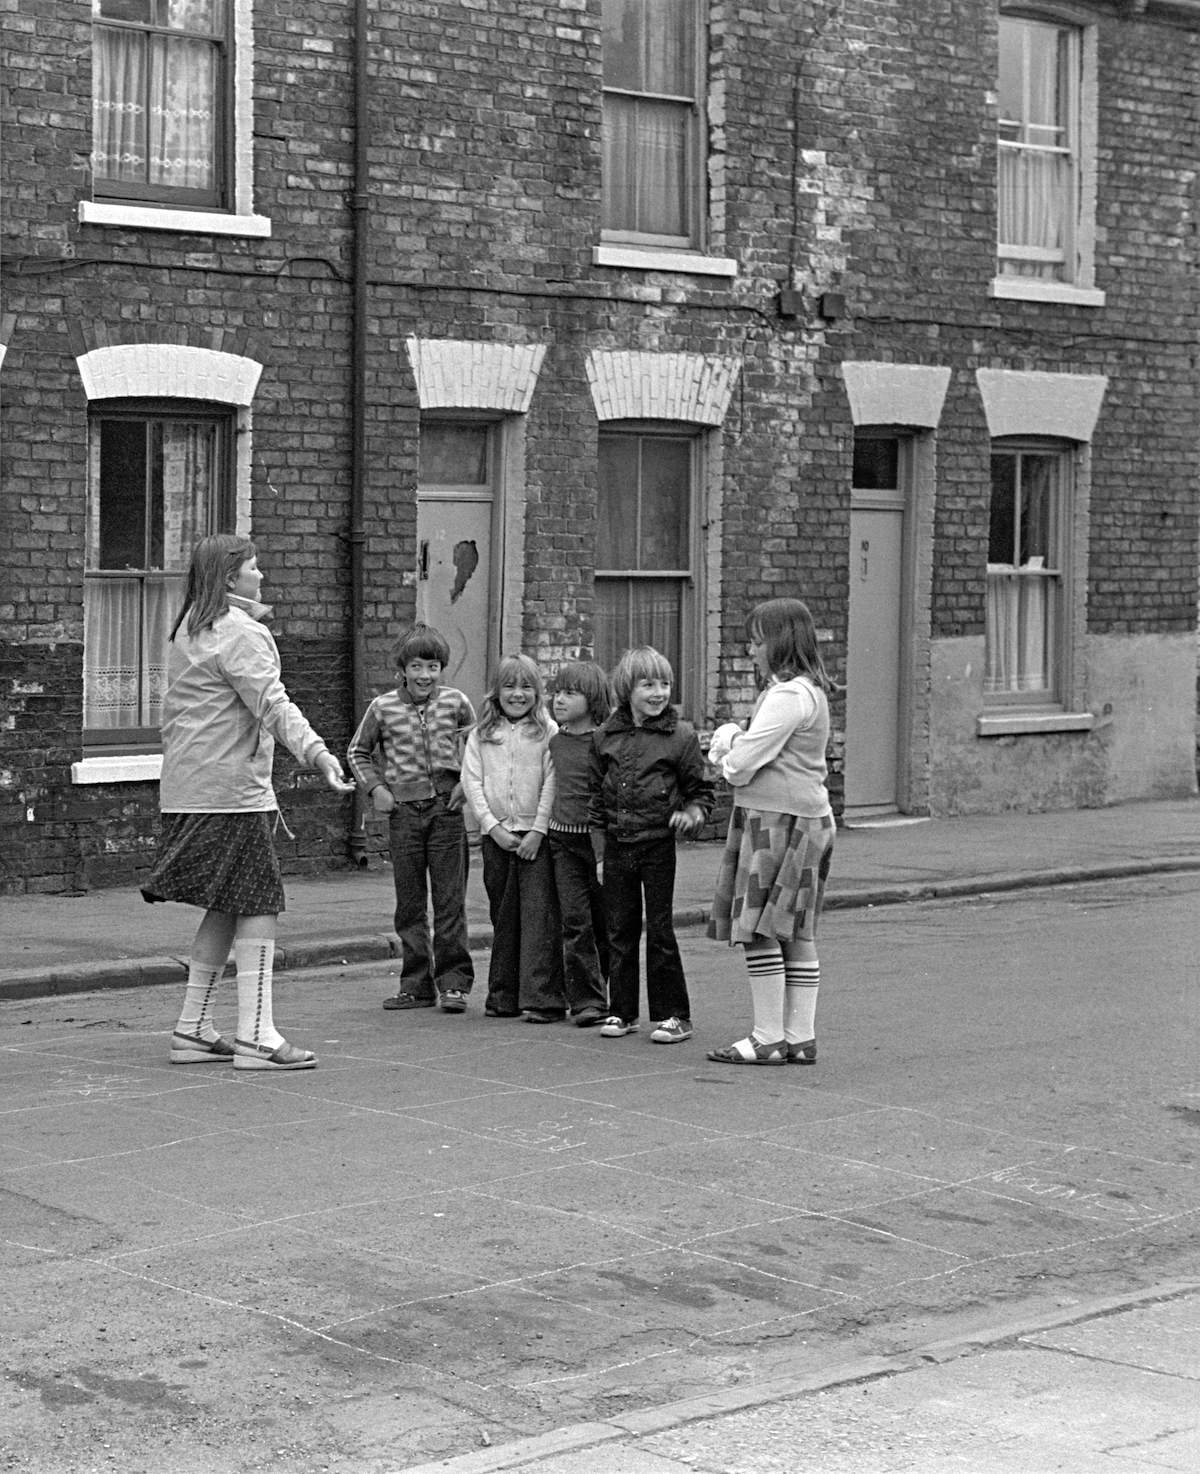 Children’s Games, Street games, Walton St area, Hull, 1979